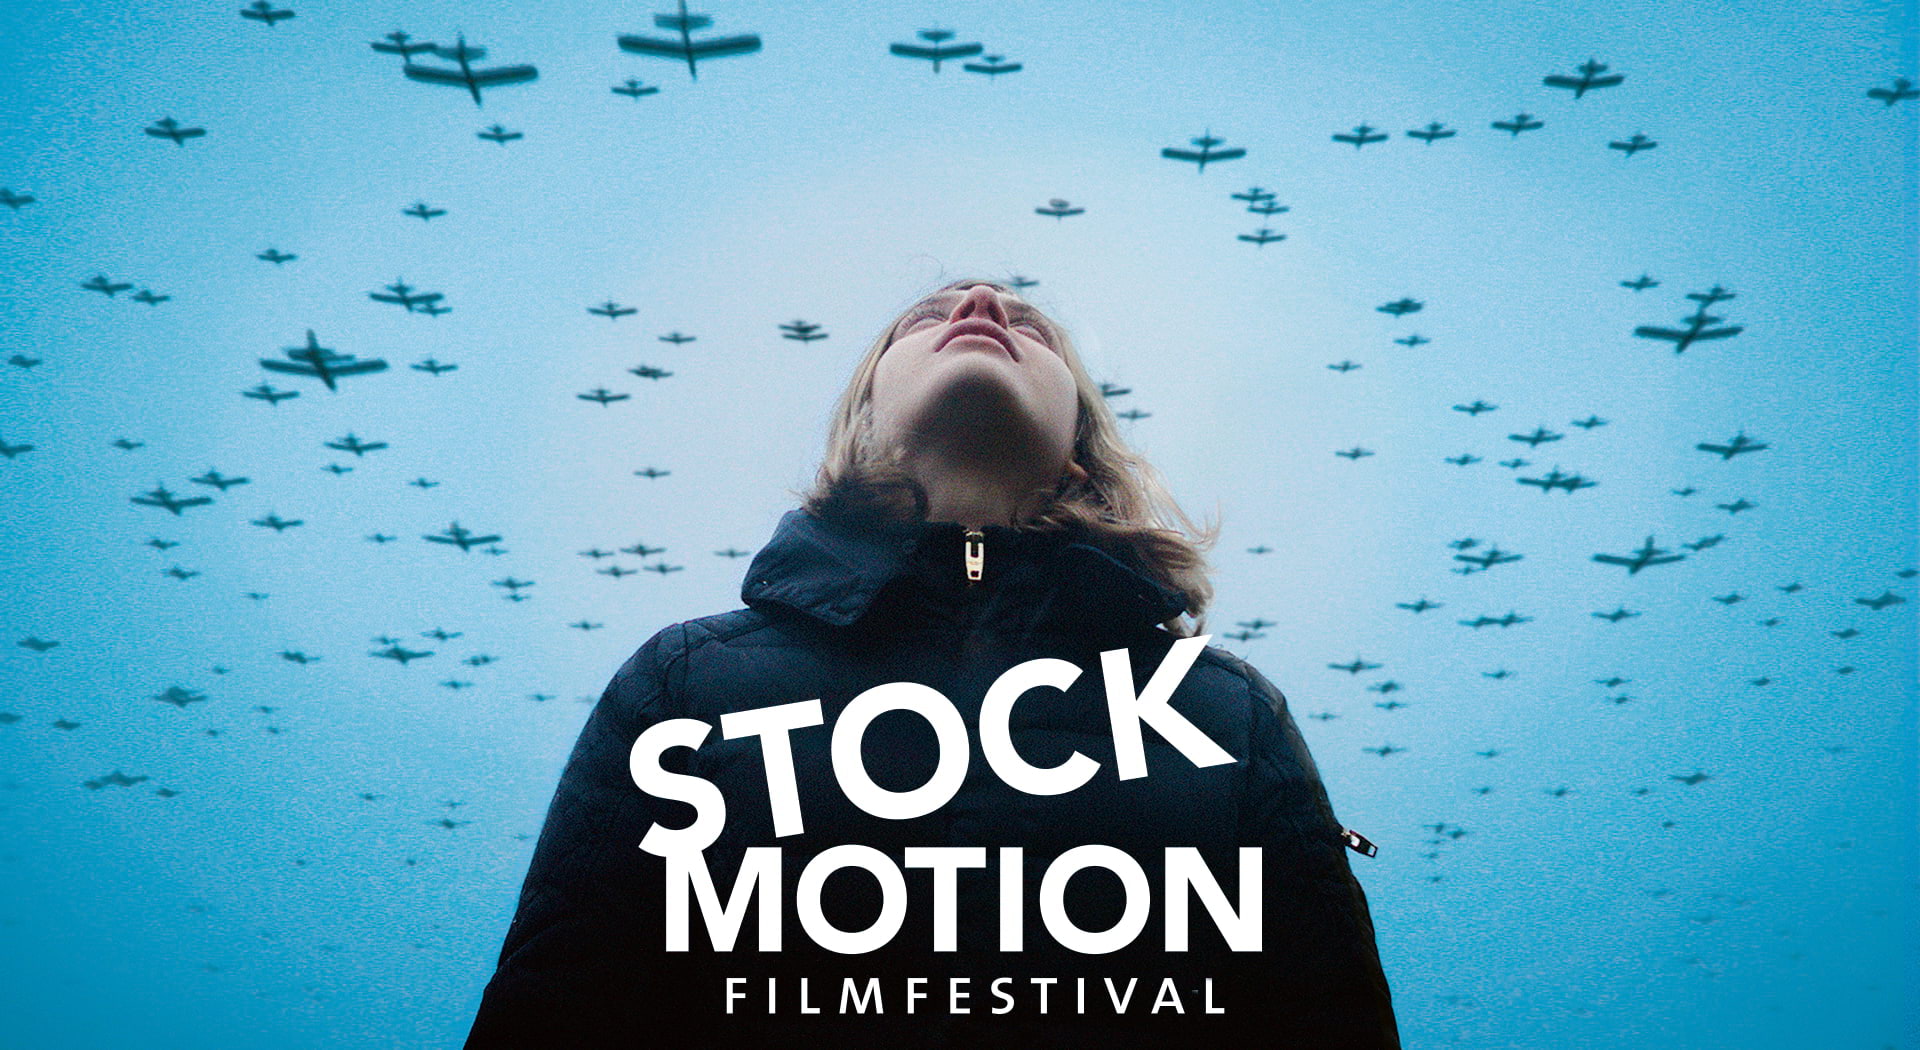 STOCKmotion filmfestival 14-17 okt!